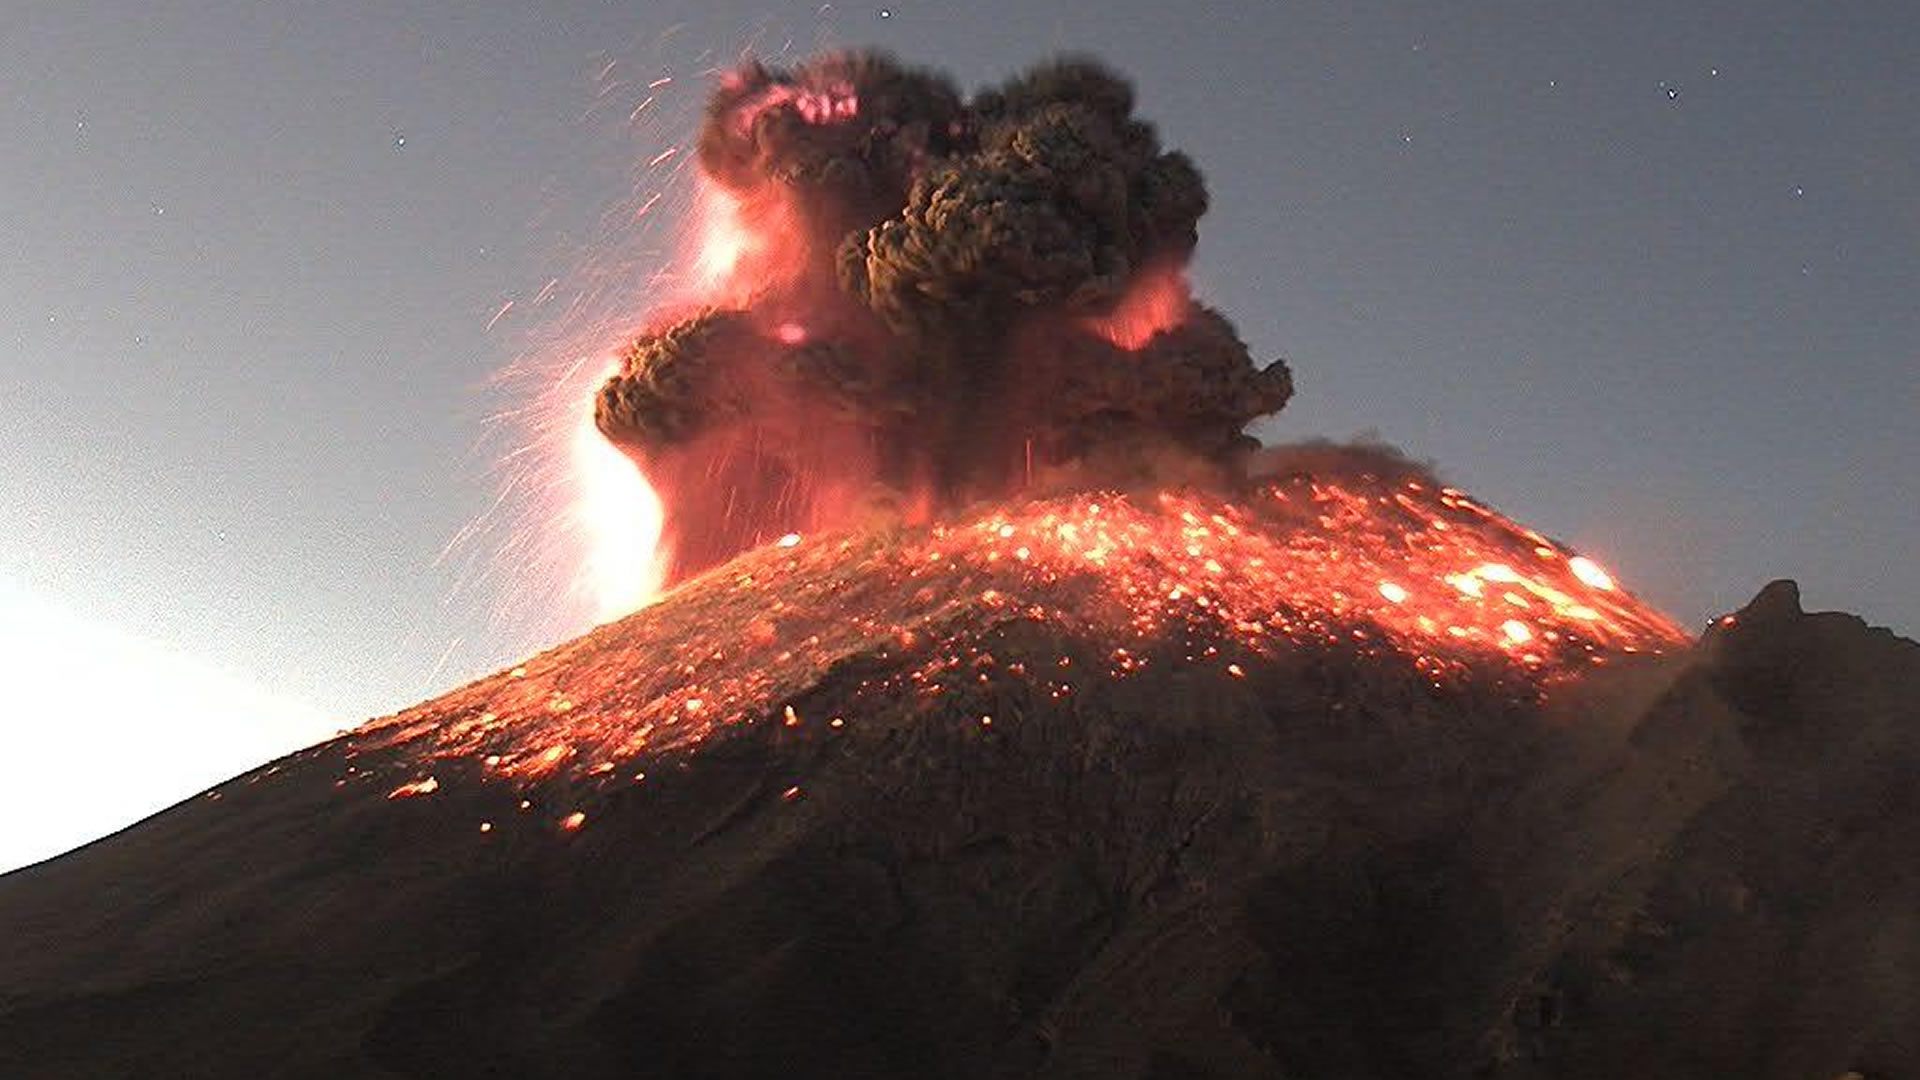 Extraños sonidos similares a turbina de avión son escuchados en el volcán Popocatépetl en México (VÍDEO)